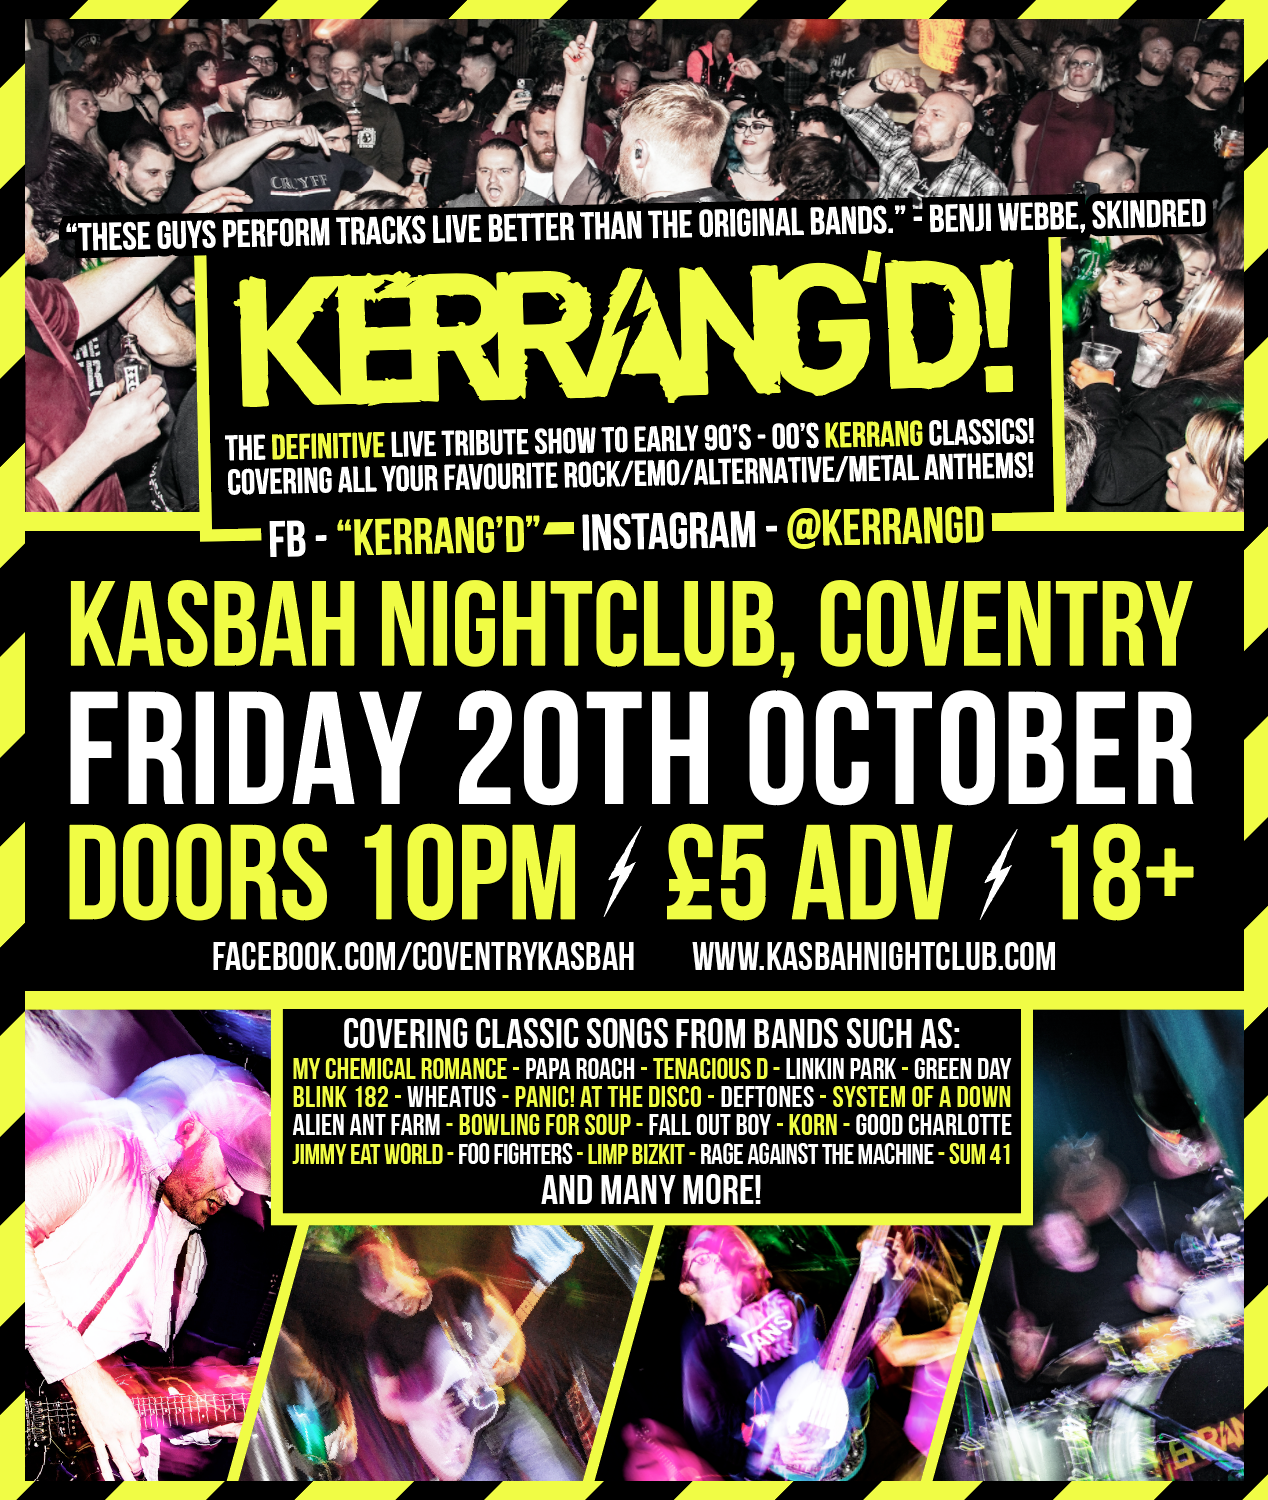 Kerrang’D! (20th October – indie room)